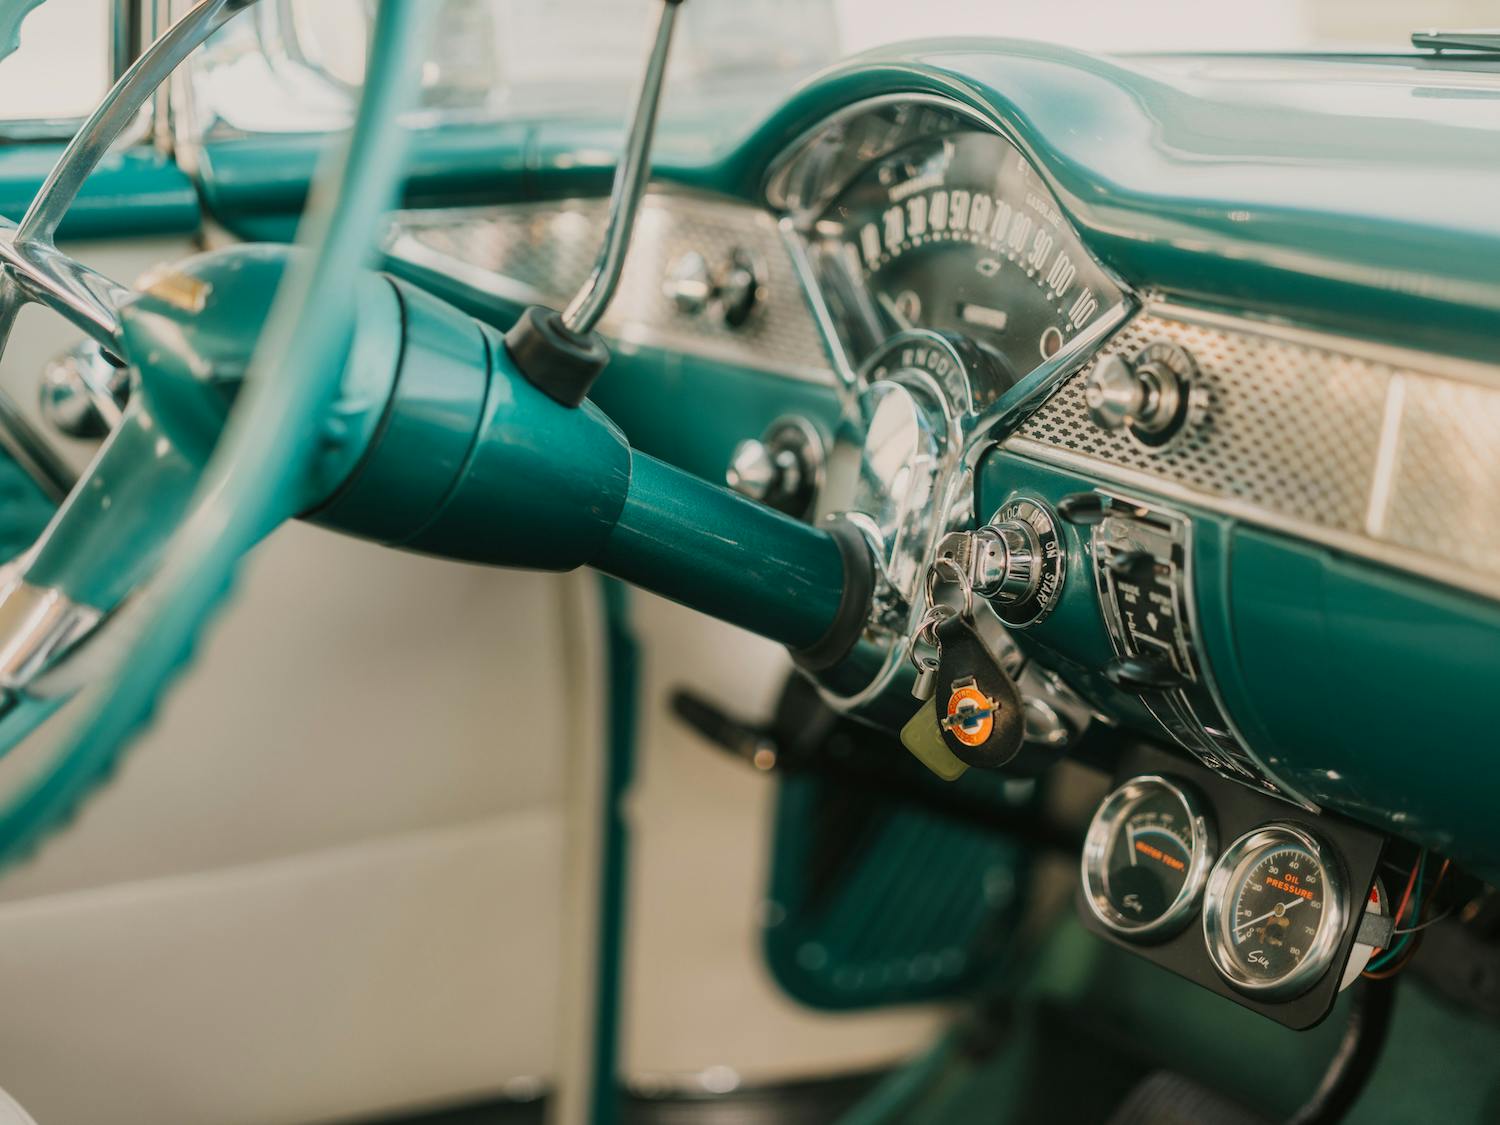 1955 Bel Air Nomad interior steering column ignition